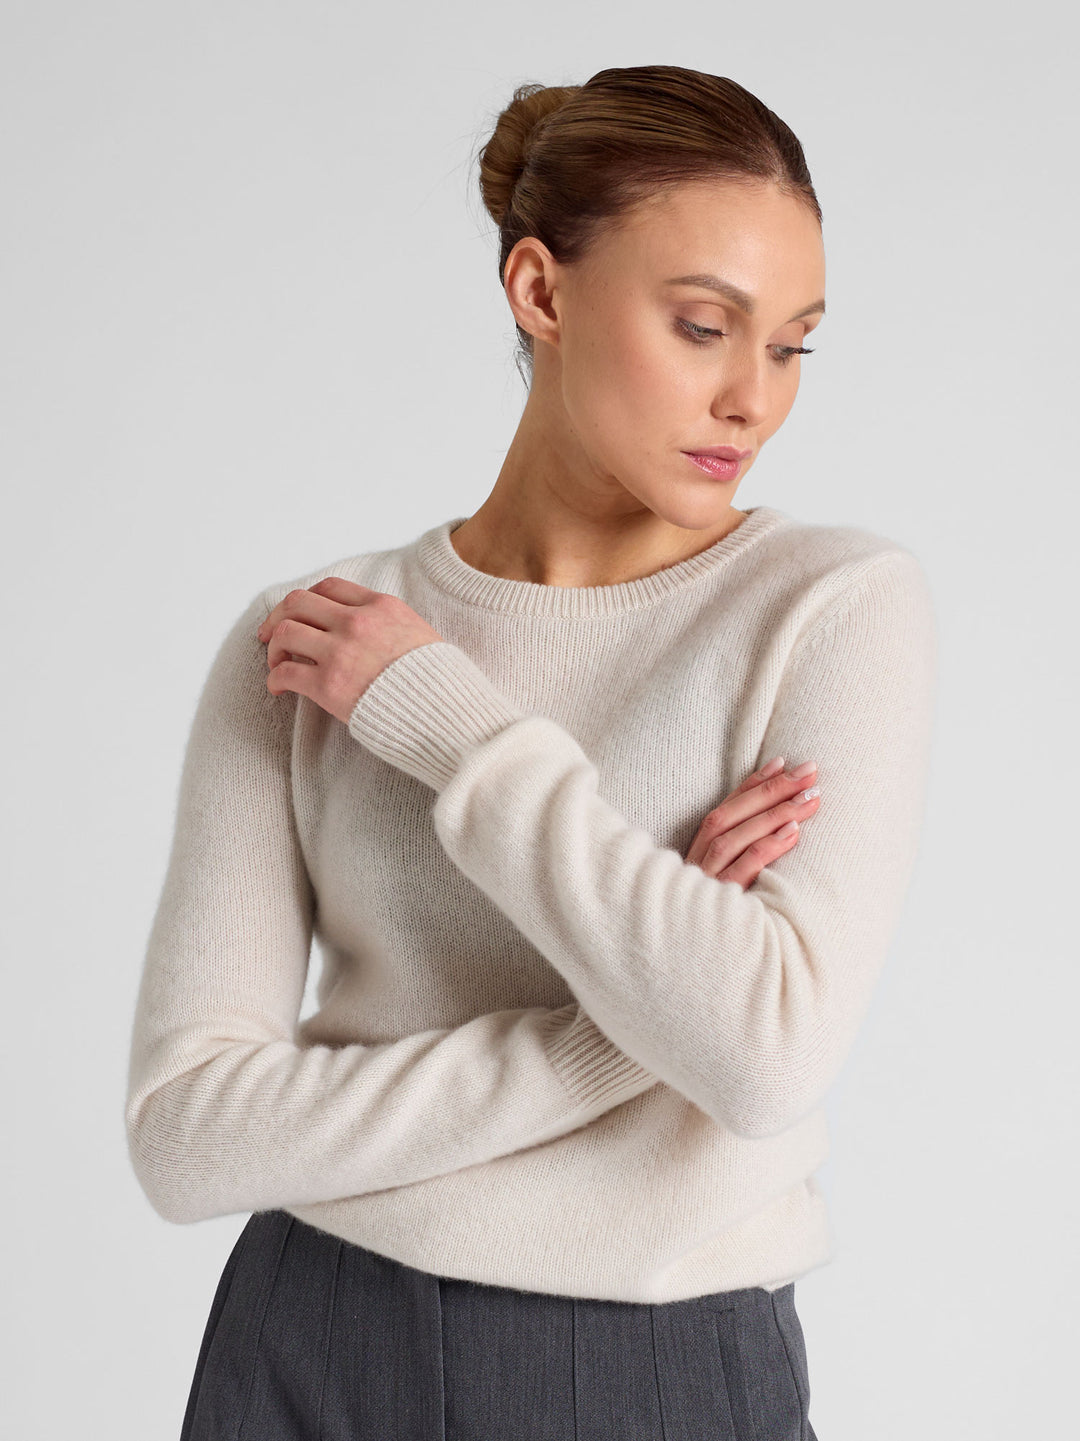 Cashmere sweater "Saga" in 100% pure cashmere. Color Pearl. Scandinavian design by Kashmina.